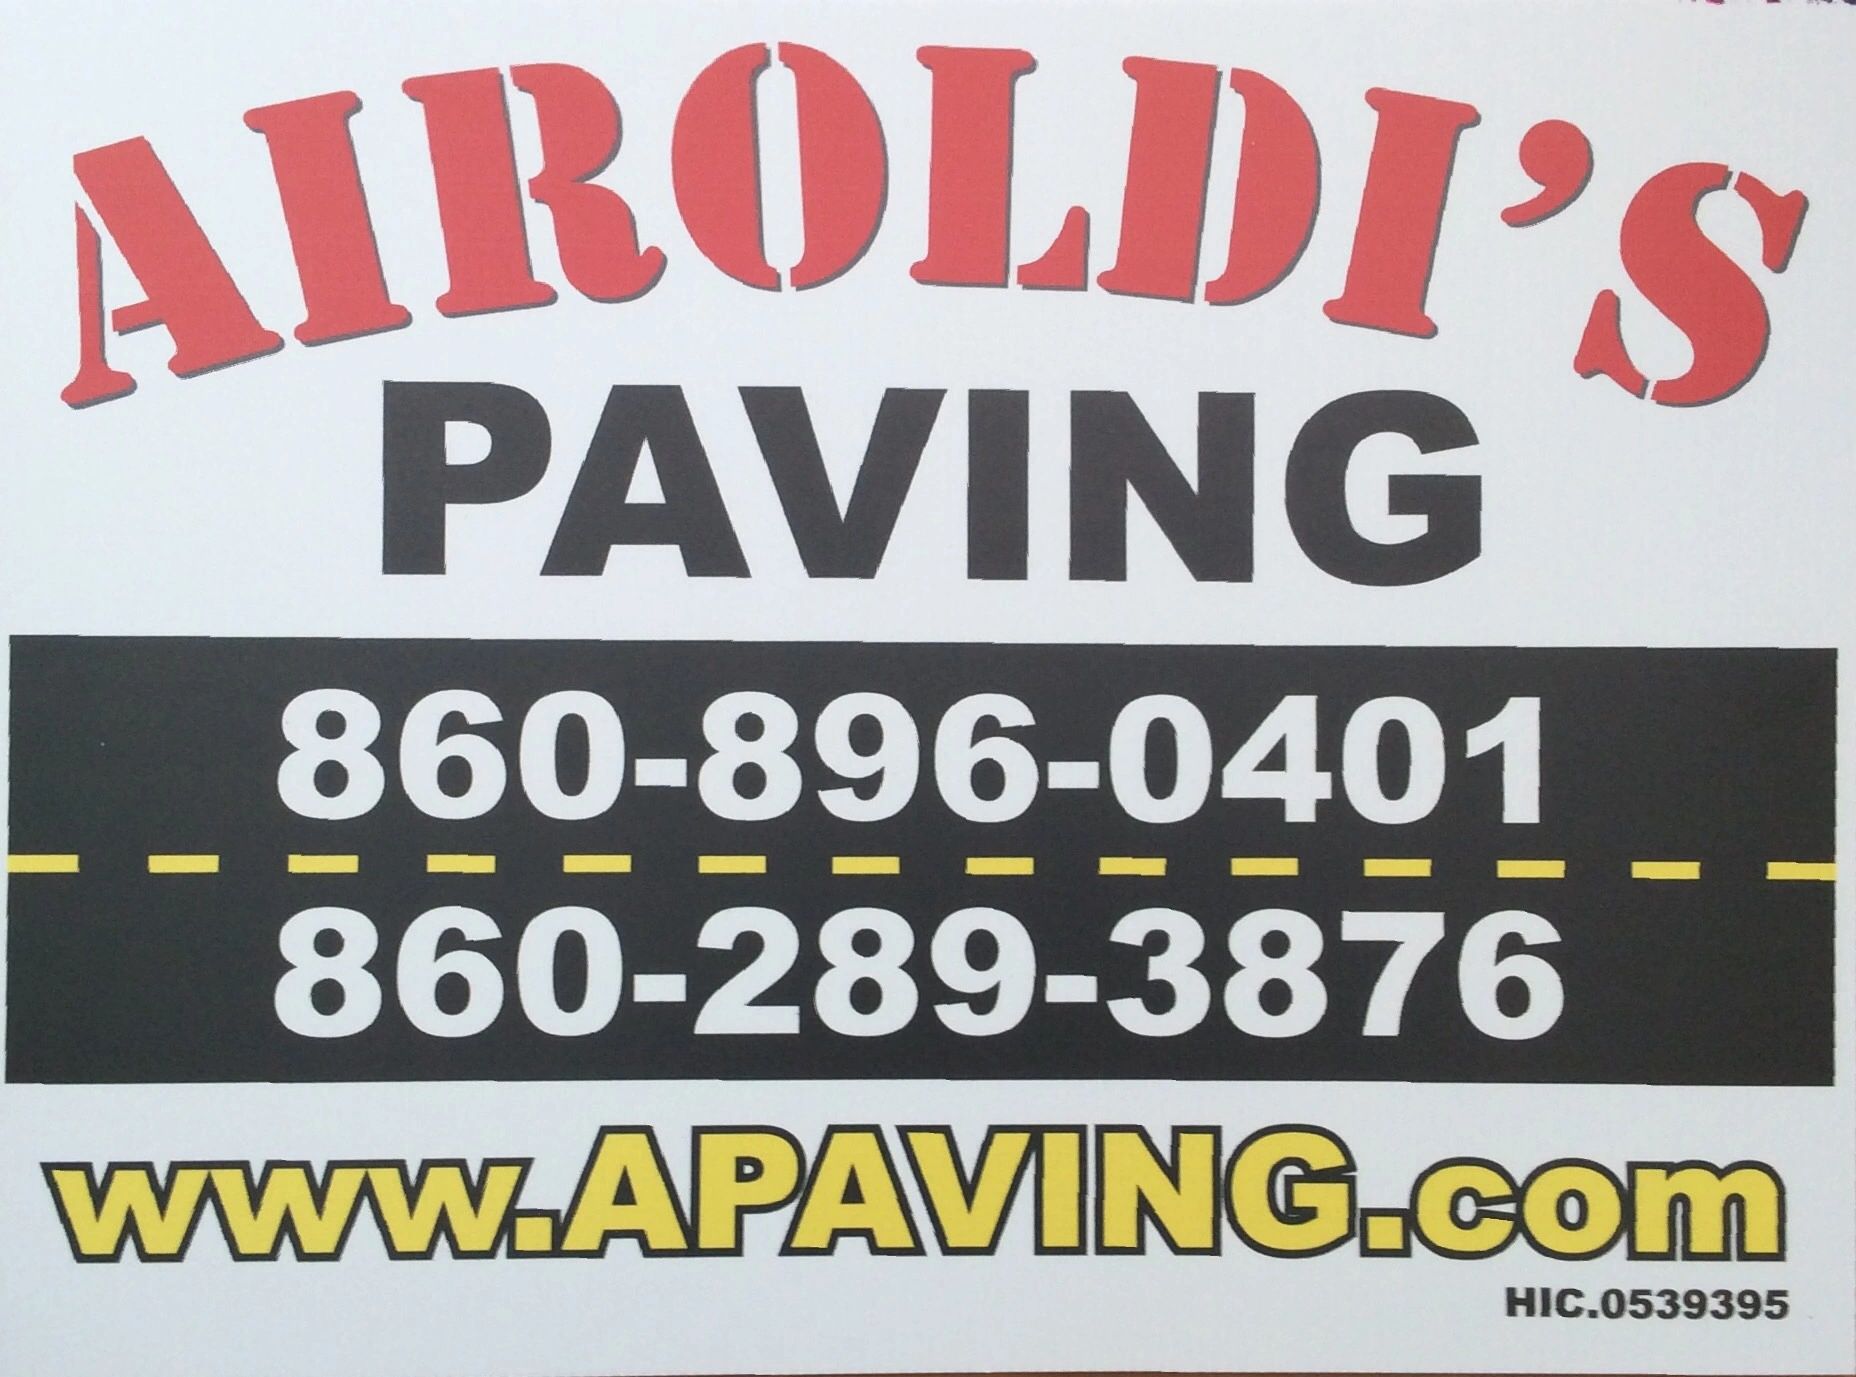 Airoldi's Paving Inc